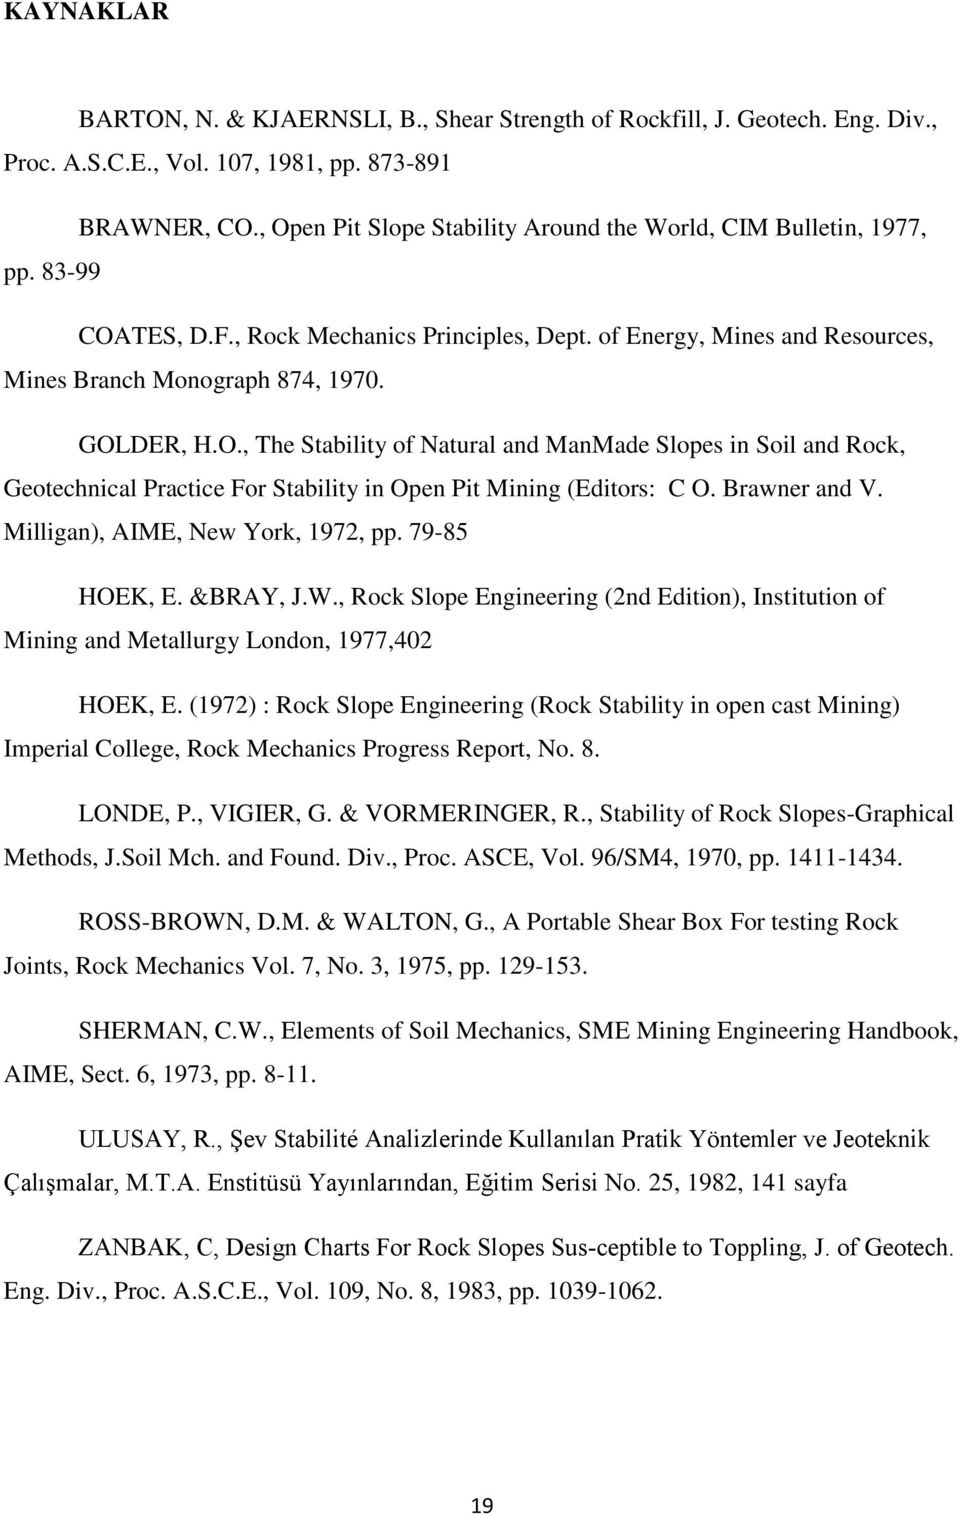 Brawner and V. Milligan), AIME, New York, 1972, pp. 79-85 HOEK, E. &BRAY, J.W., Rock Slope Engineering (2nd Edition), Institution of Mining and Metallurgy London, 1977,402 HOEK, E.